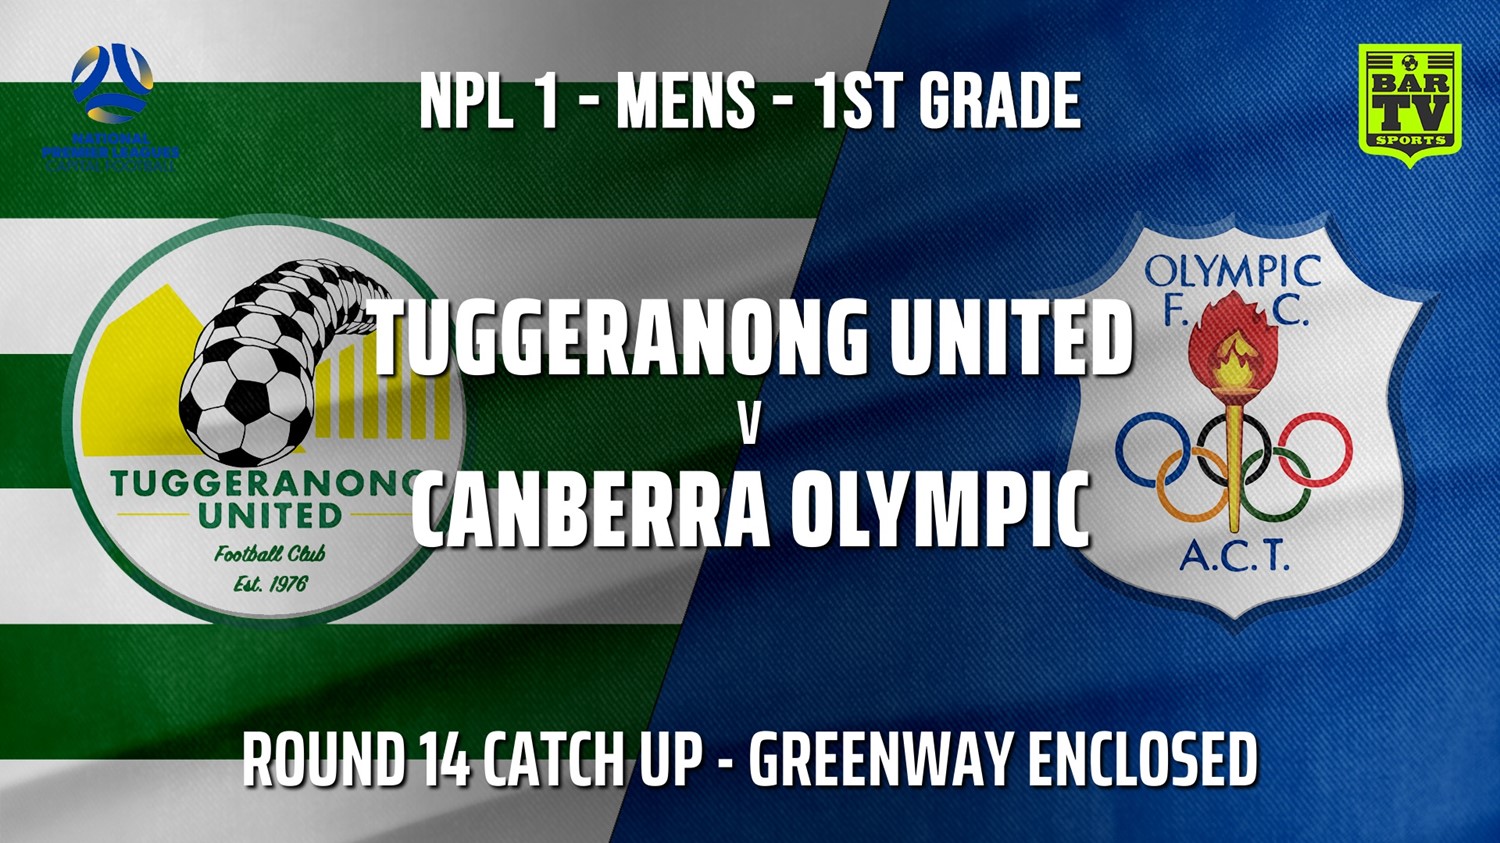 210810-Capital NPL Round 14 Catch Up - Tuggeranong United FC v Canberra Olympic FC Slate Image